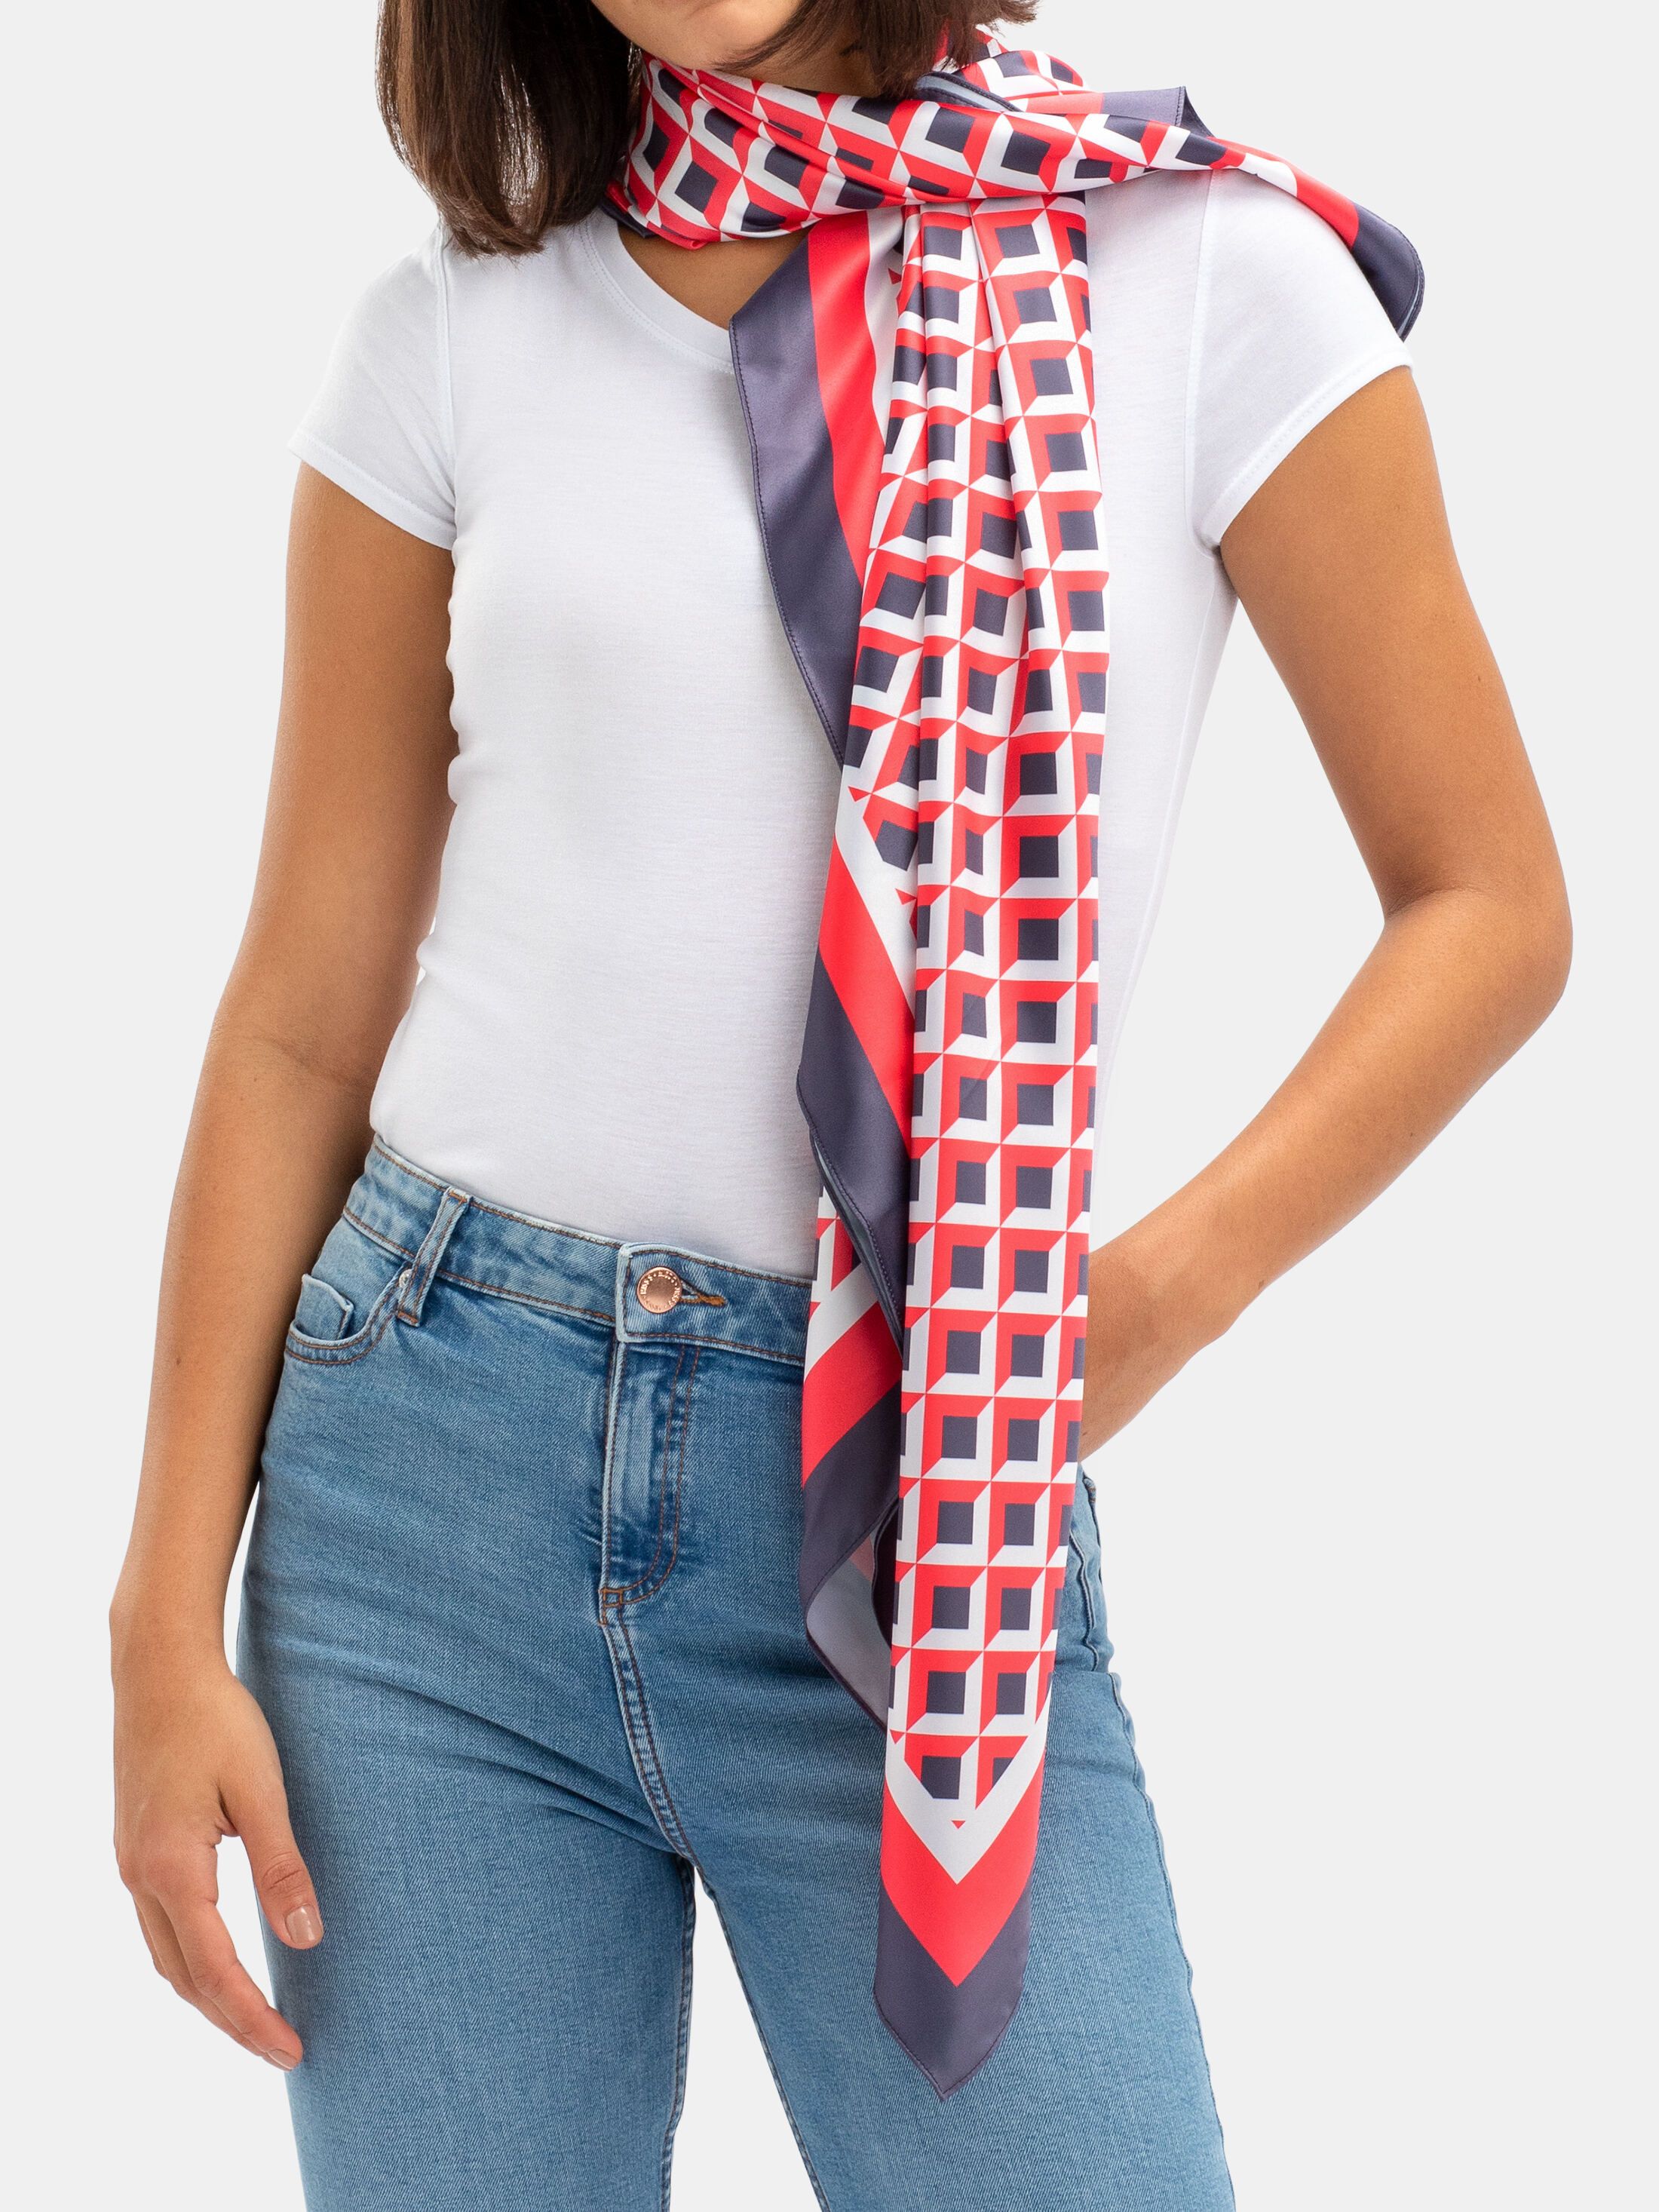 printing on Silk scarf